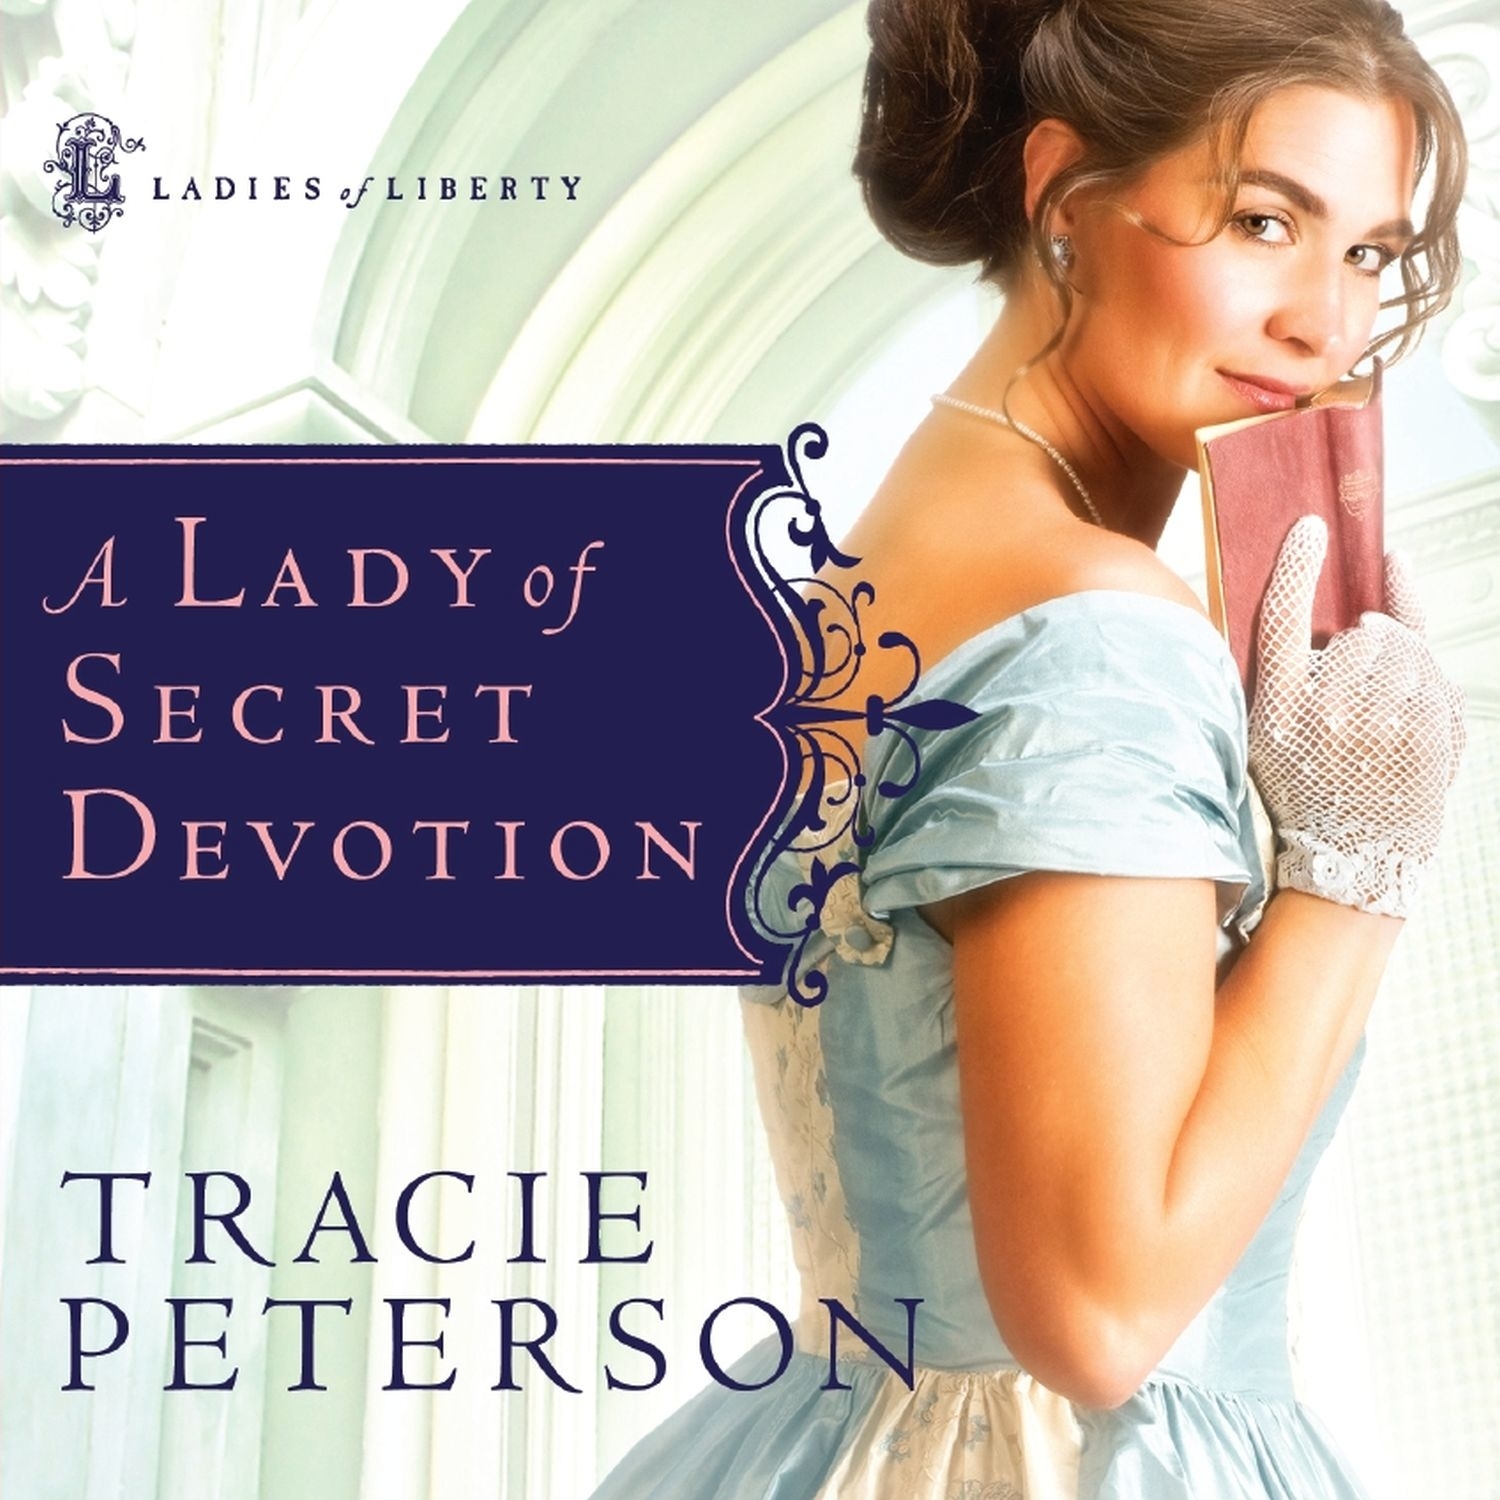 Lady of Secret Devotion